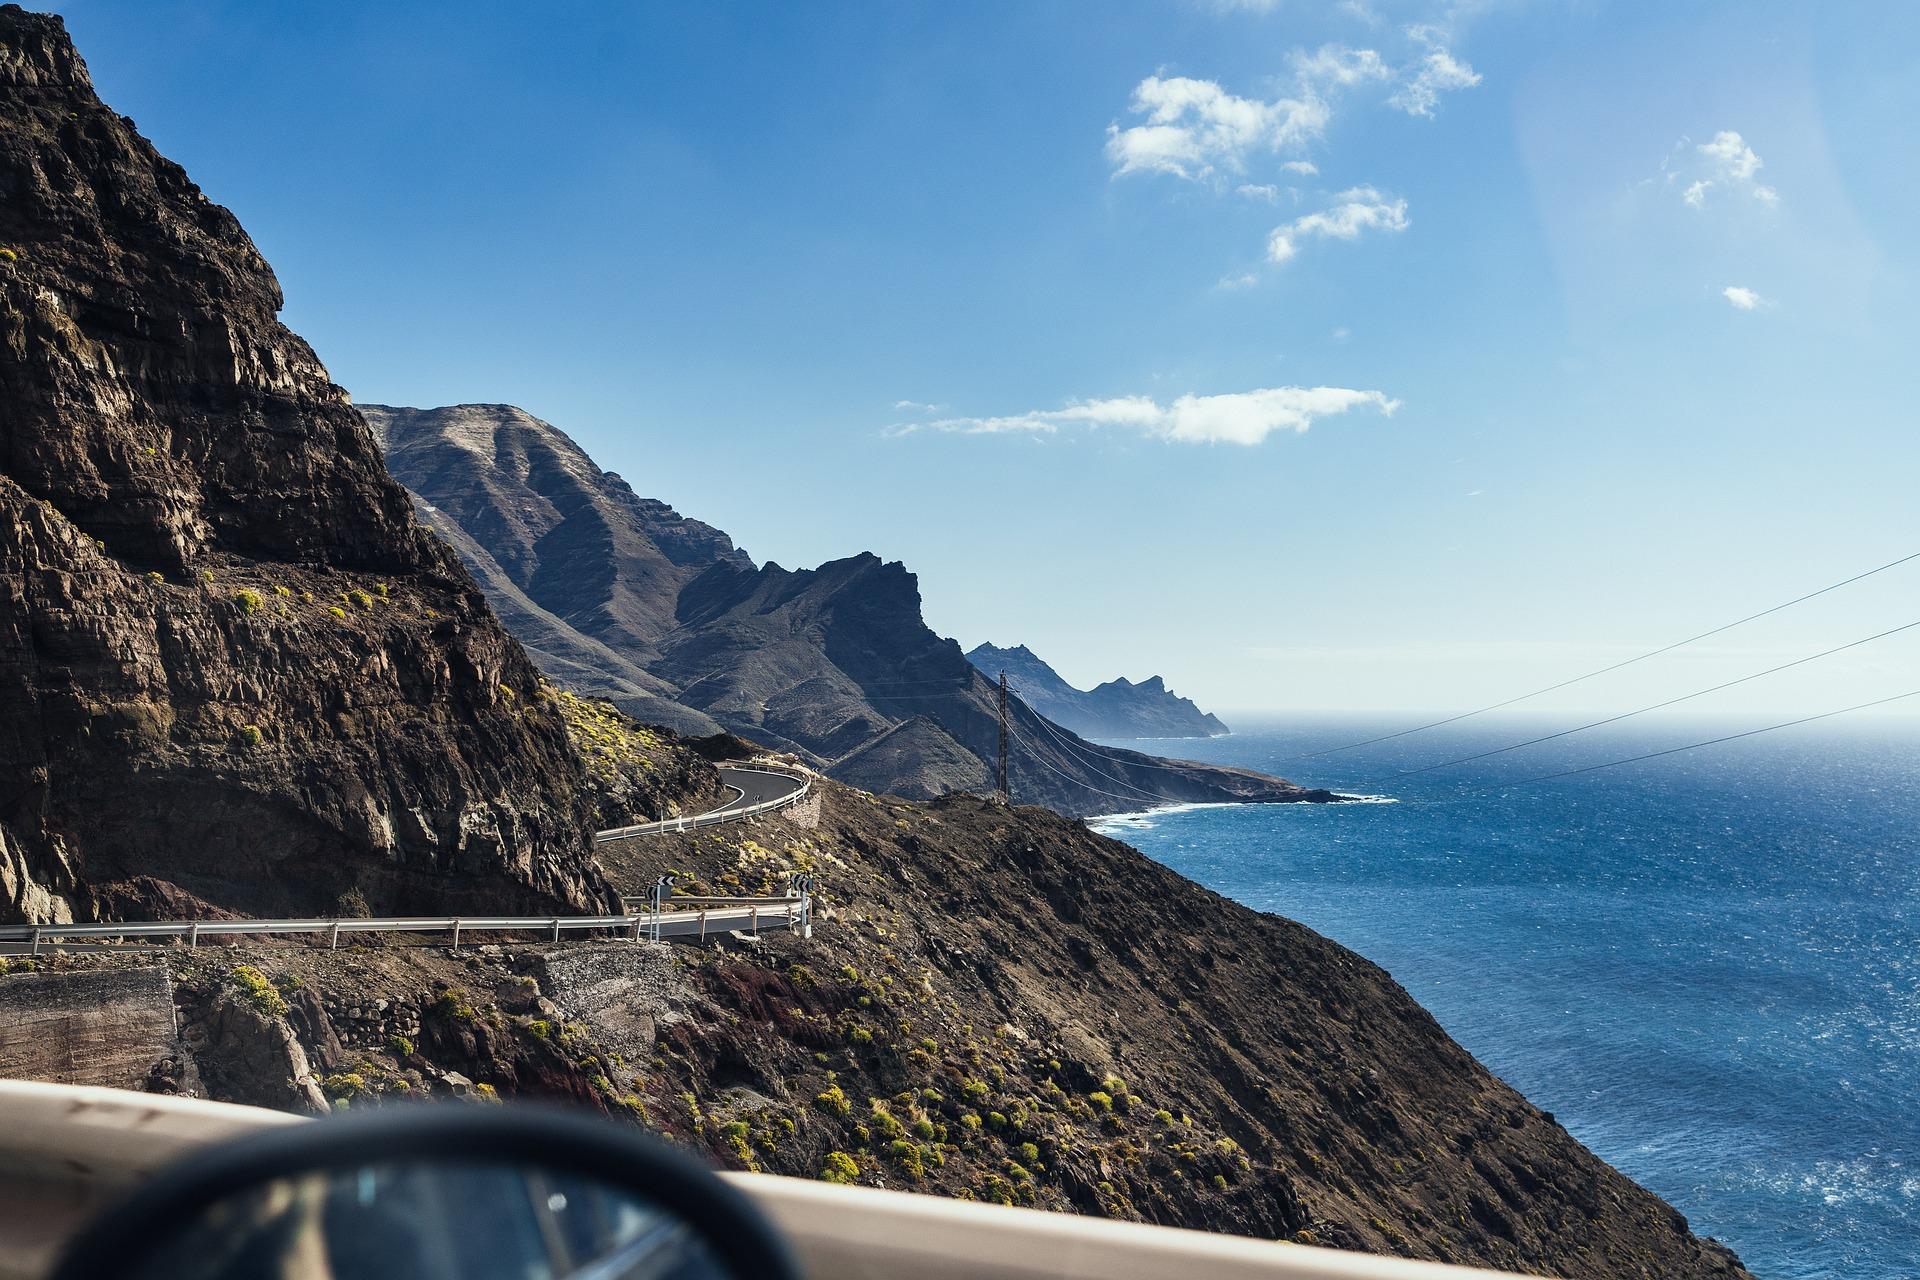 Gran Canaria: roads winding along the rocky coast.